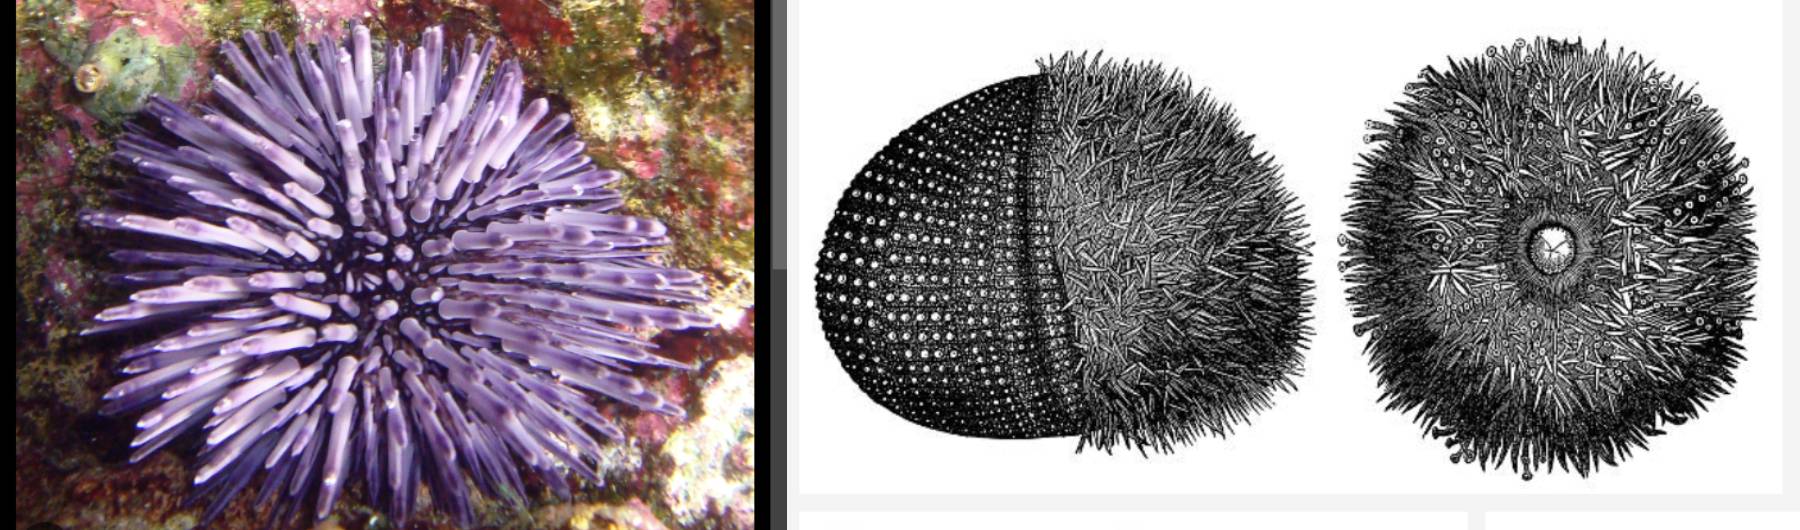 urchin ideas